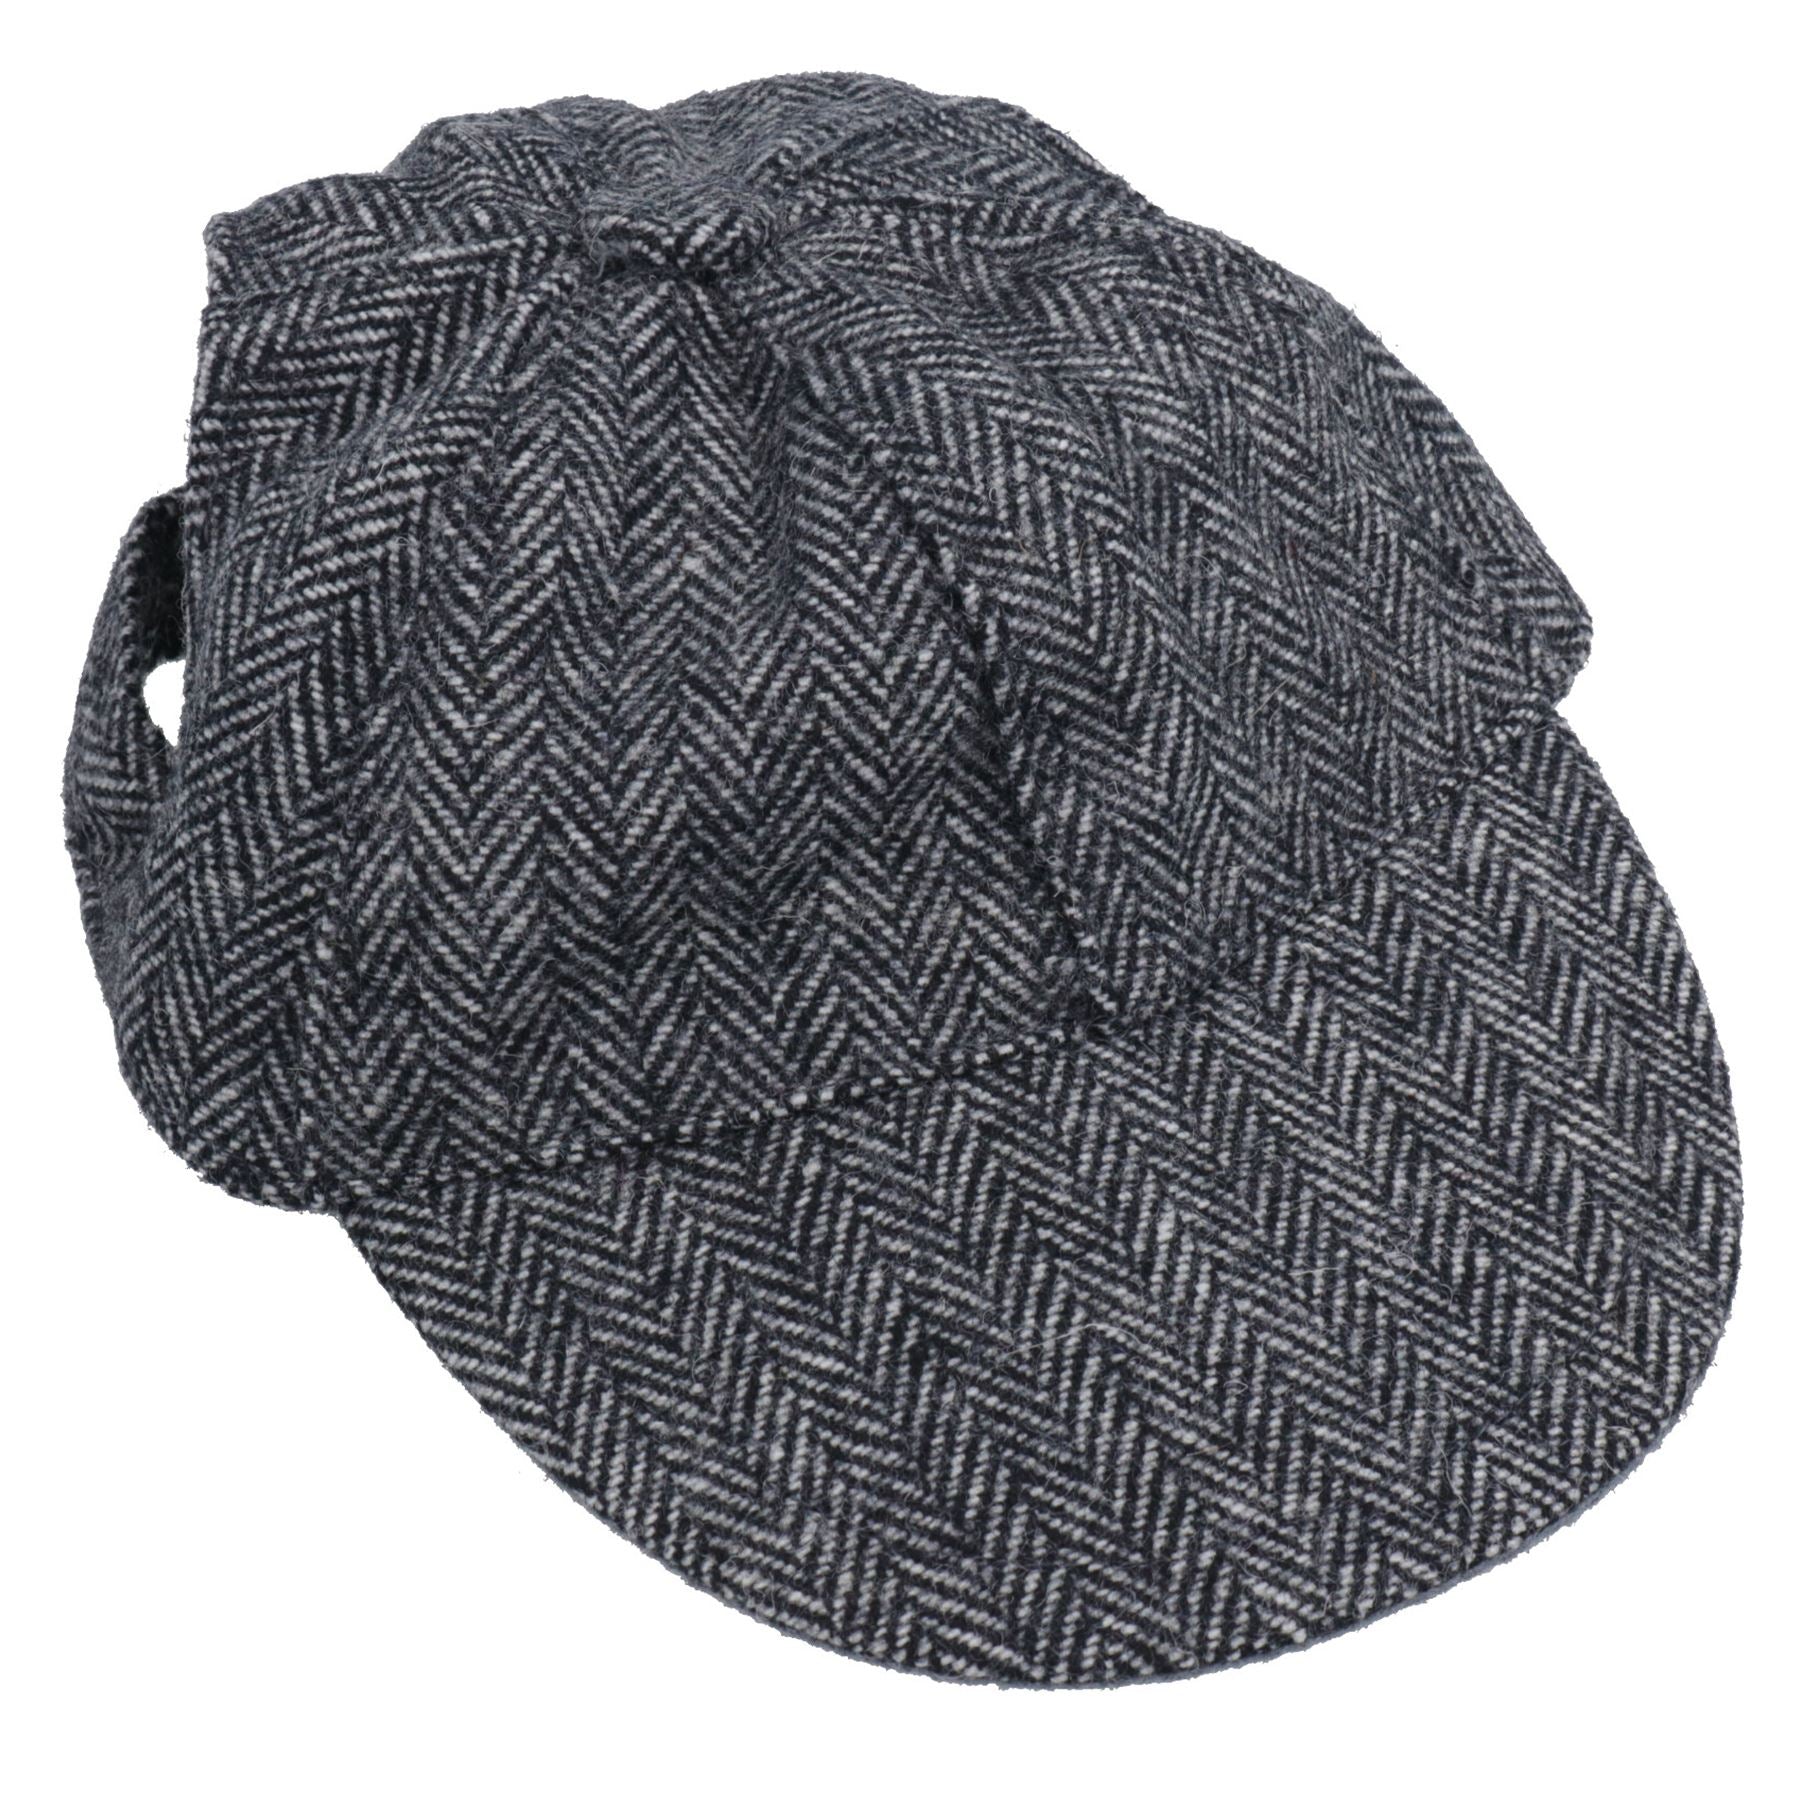 Small Smart Stylish Grey Tweed Dog Puppy Hat Cap With Dog Ear Slots